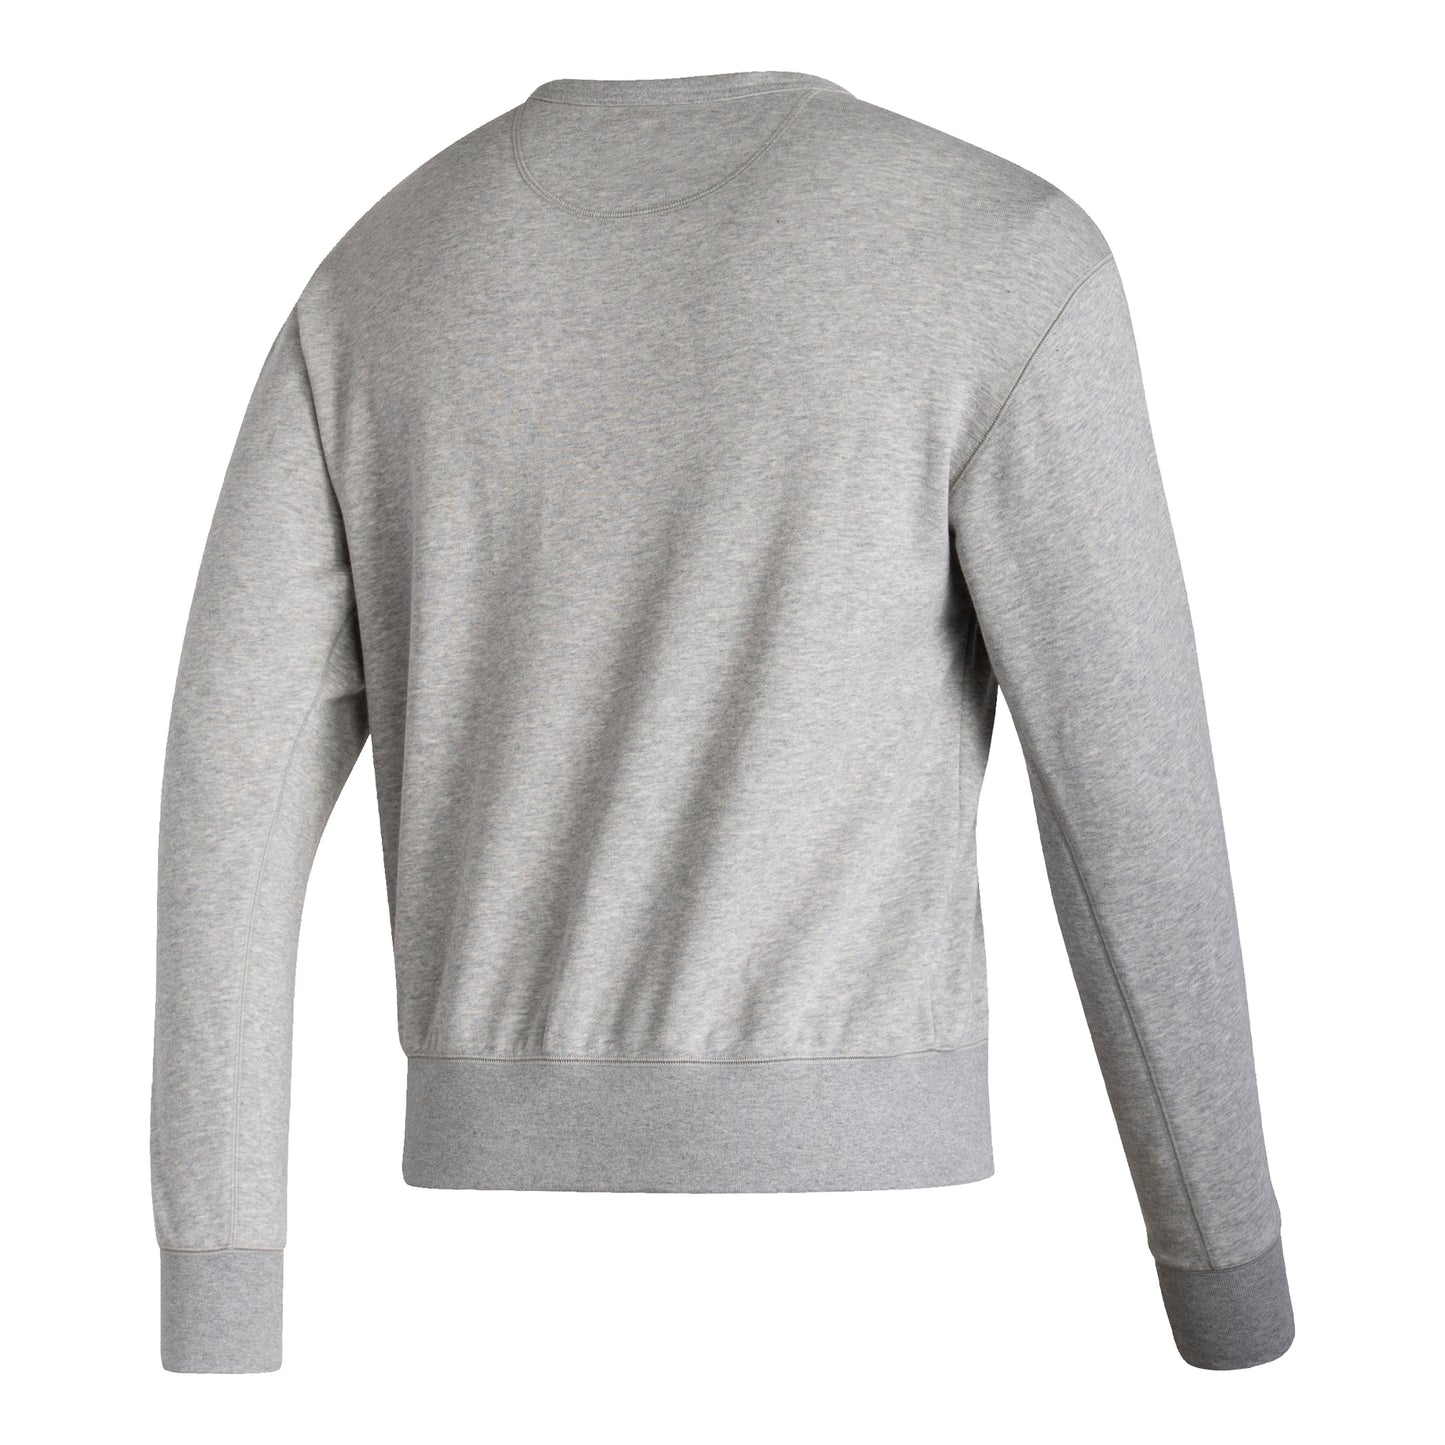 ADIDAS - ONLY THE BEST Premium Vintage Sweatshirt - Athletic Grey